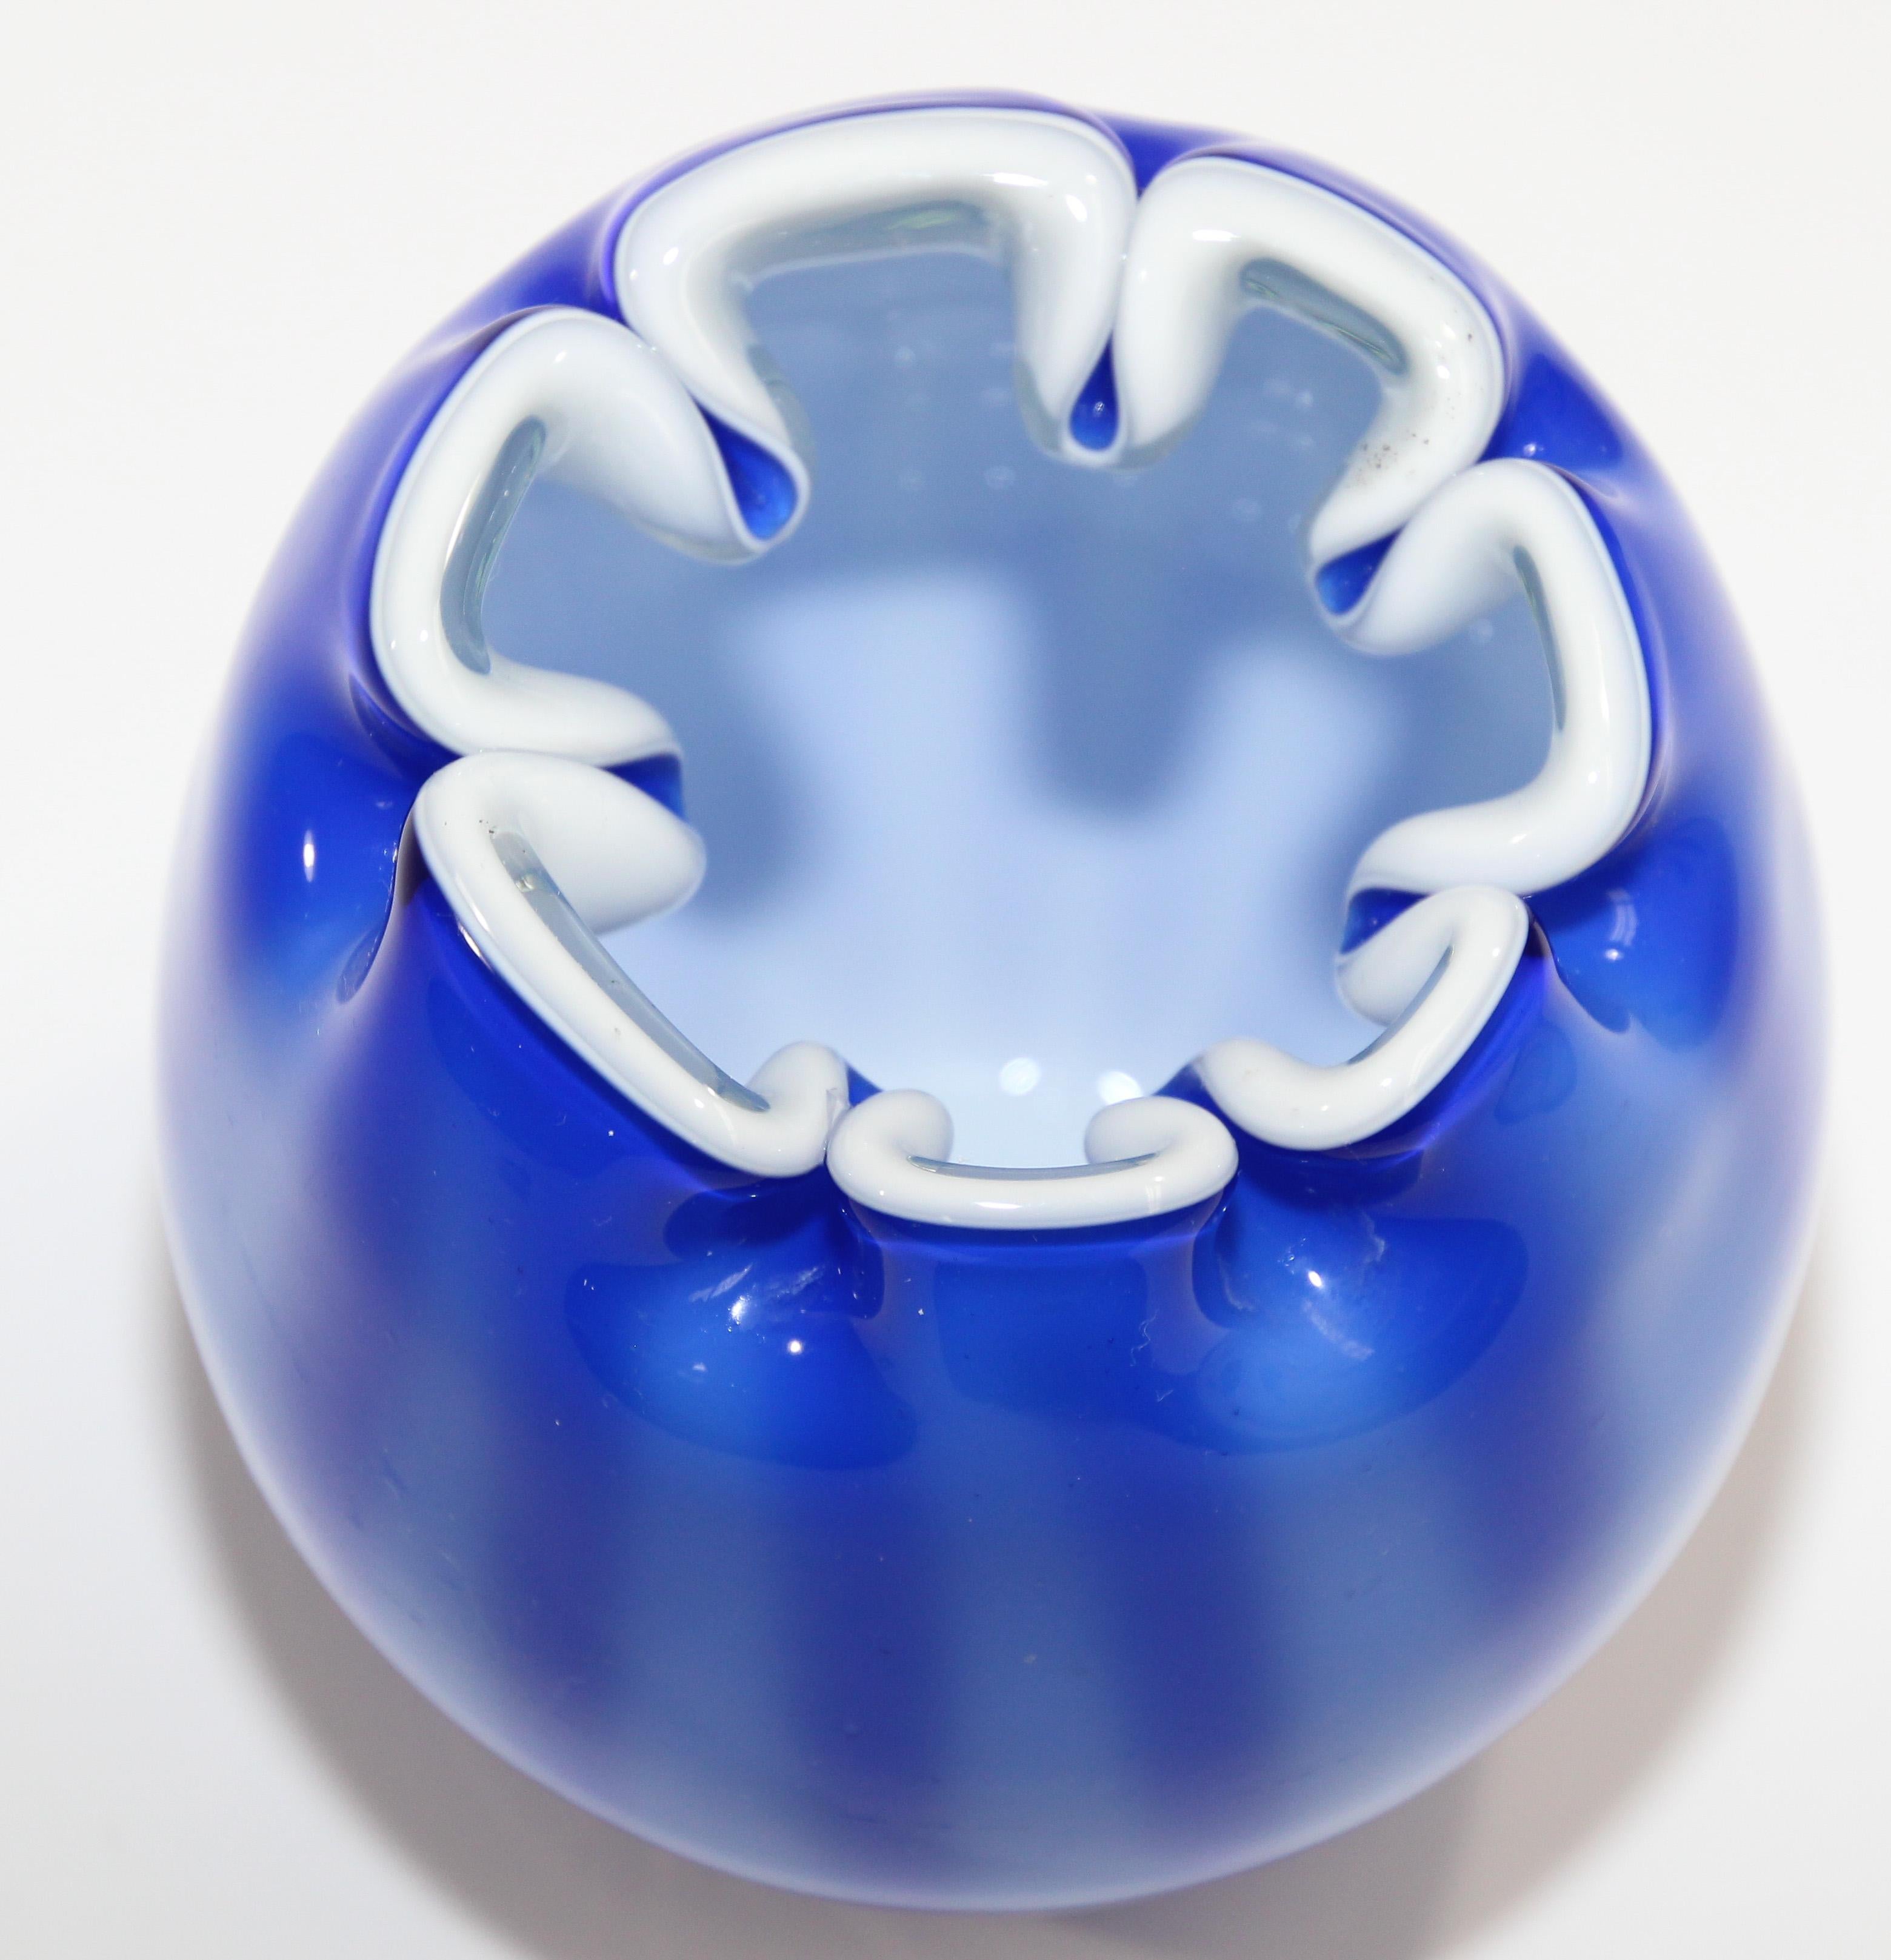 Hand-Crafted Hand Blown Studio Art Glass Vase in Cobalt Blue with White Design